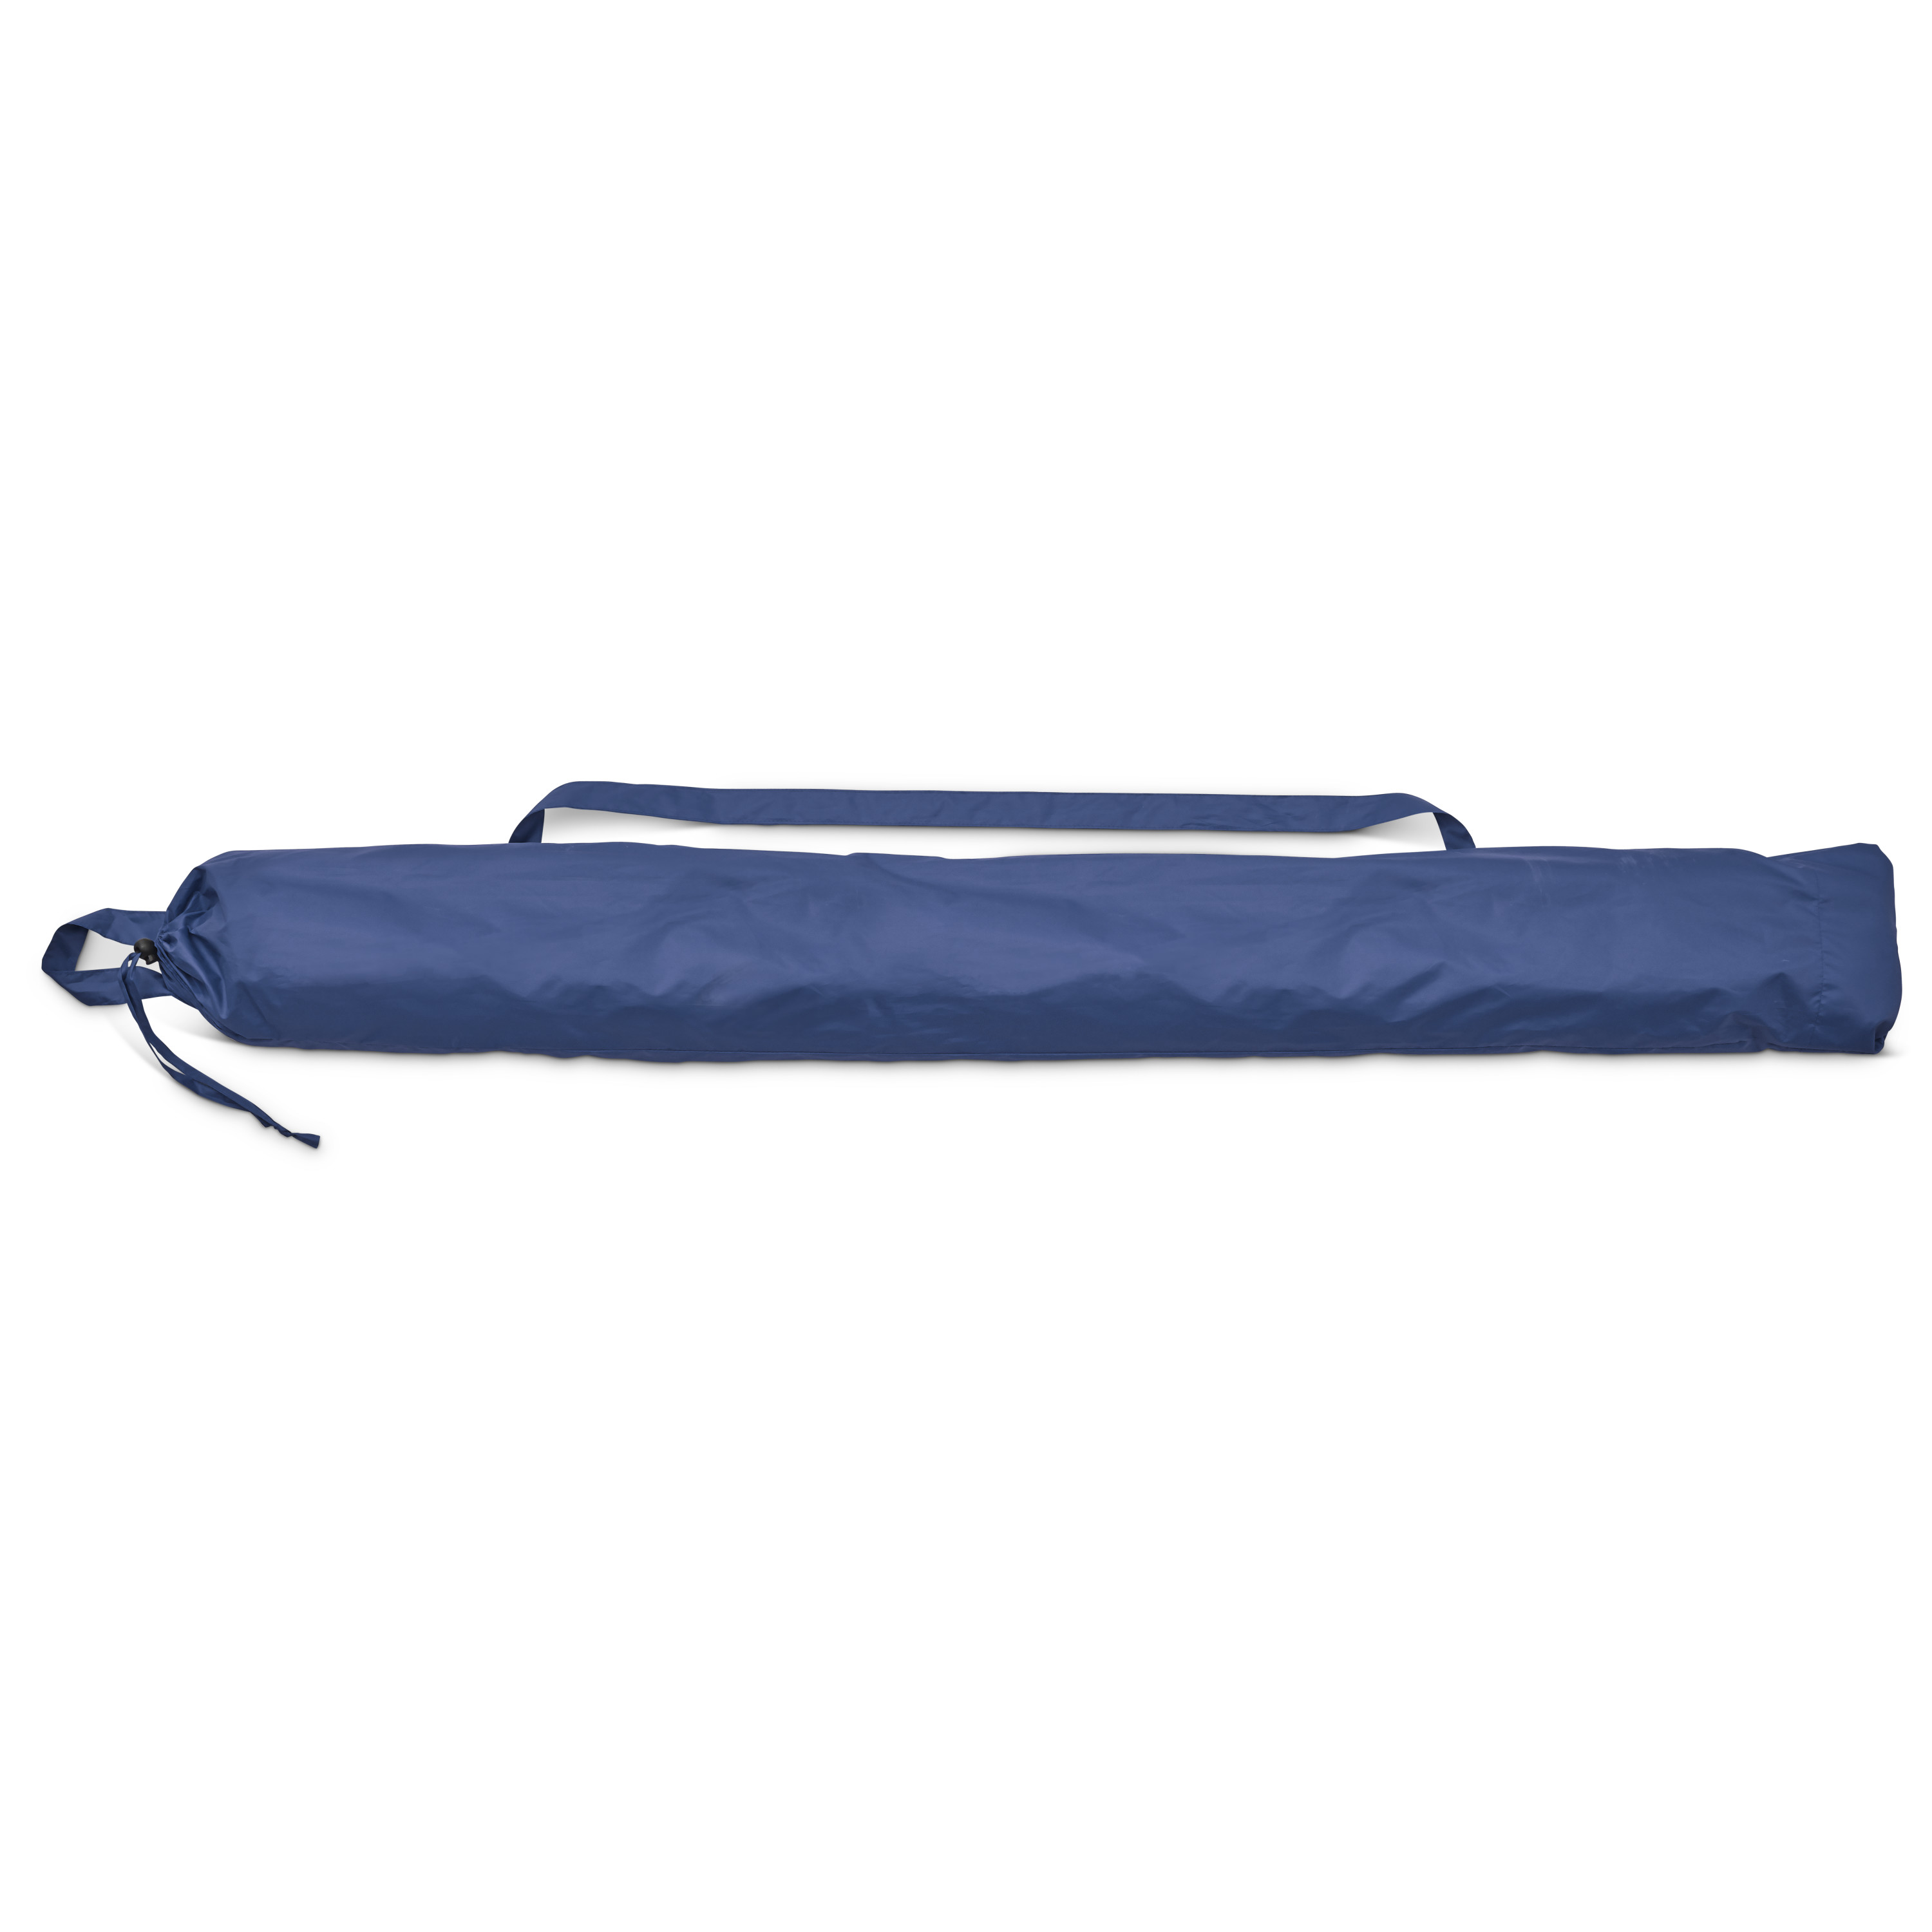 Sport-Brella Portable All-Weather & Sun Umbrella, 8 foot Canopy, Blue - image 4 of 7